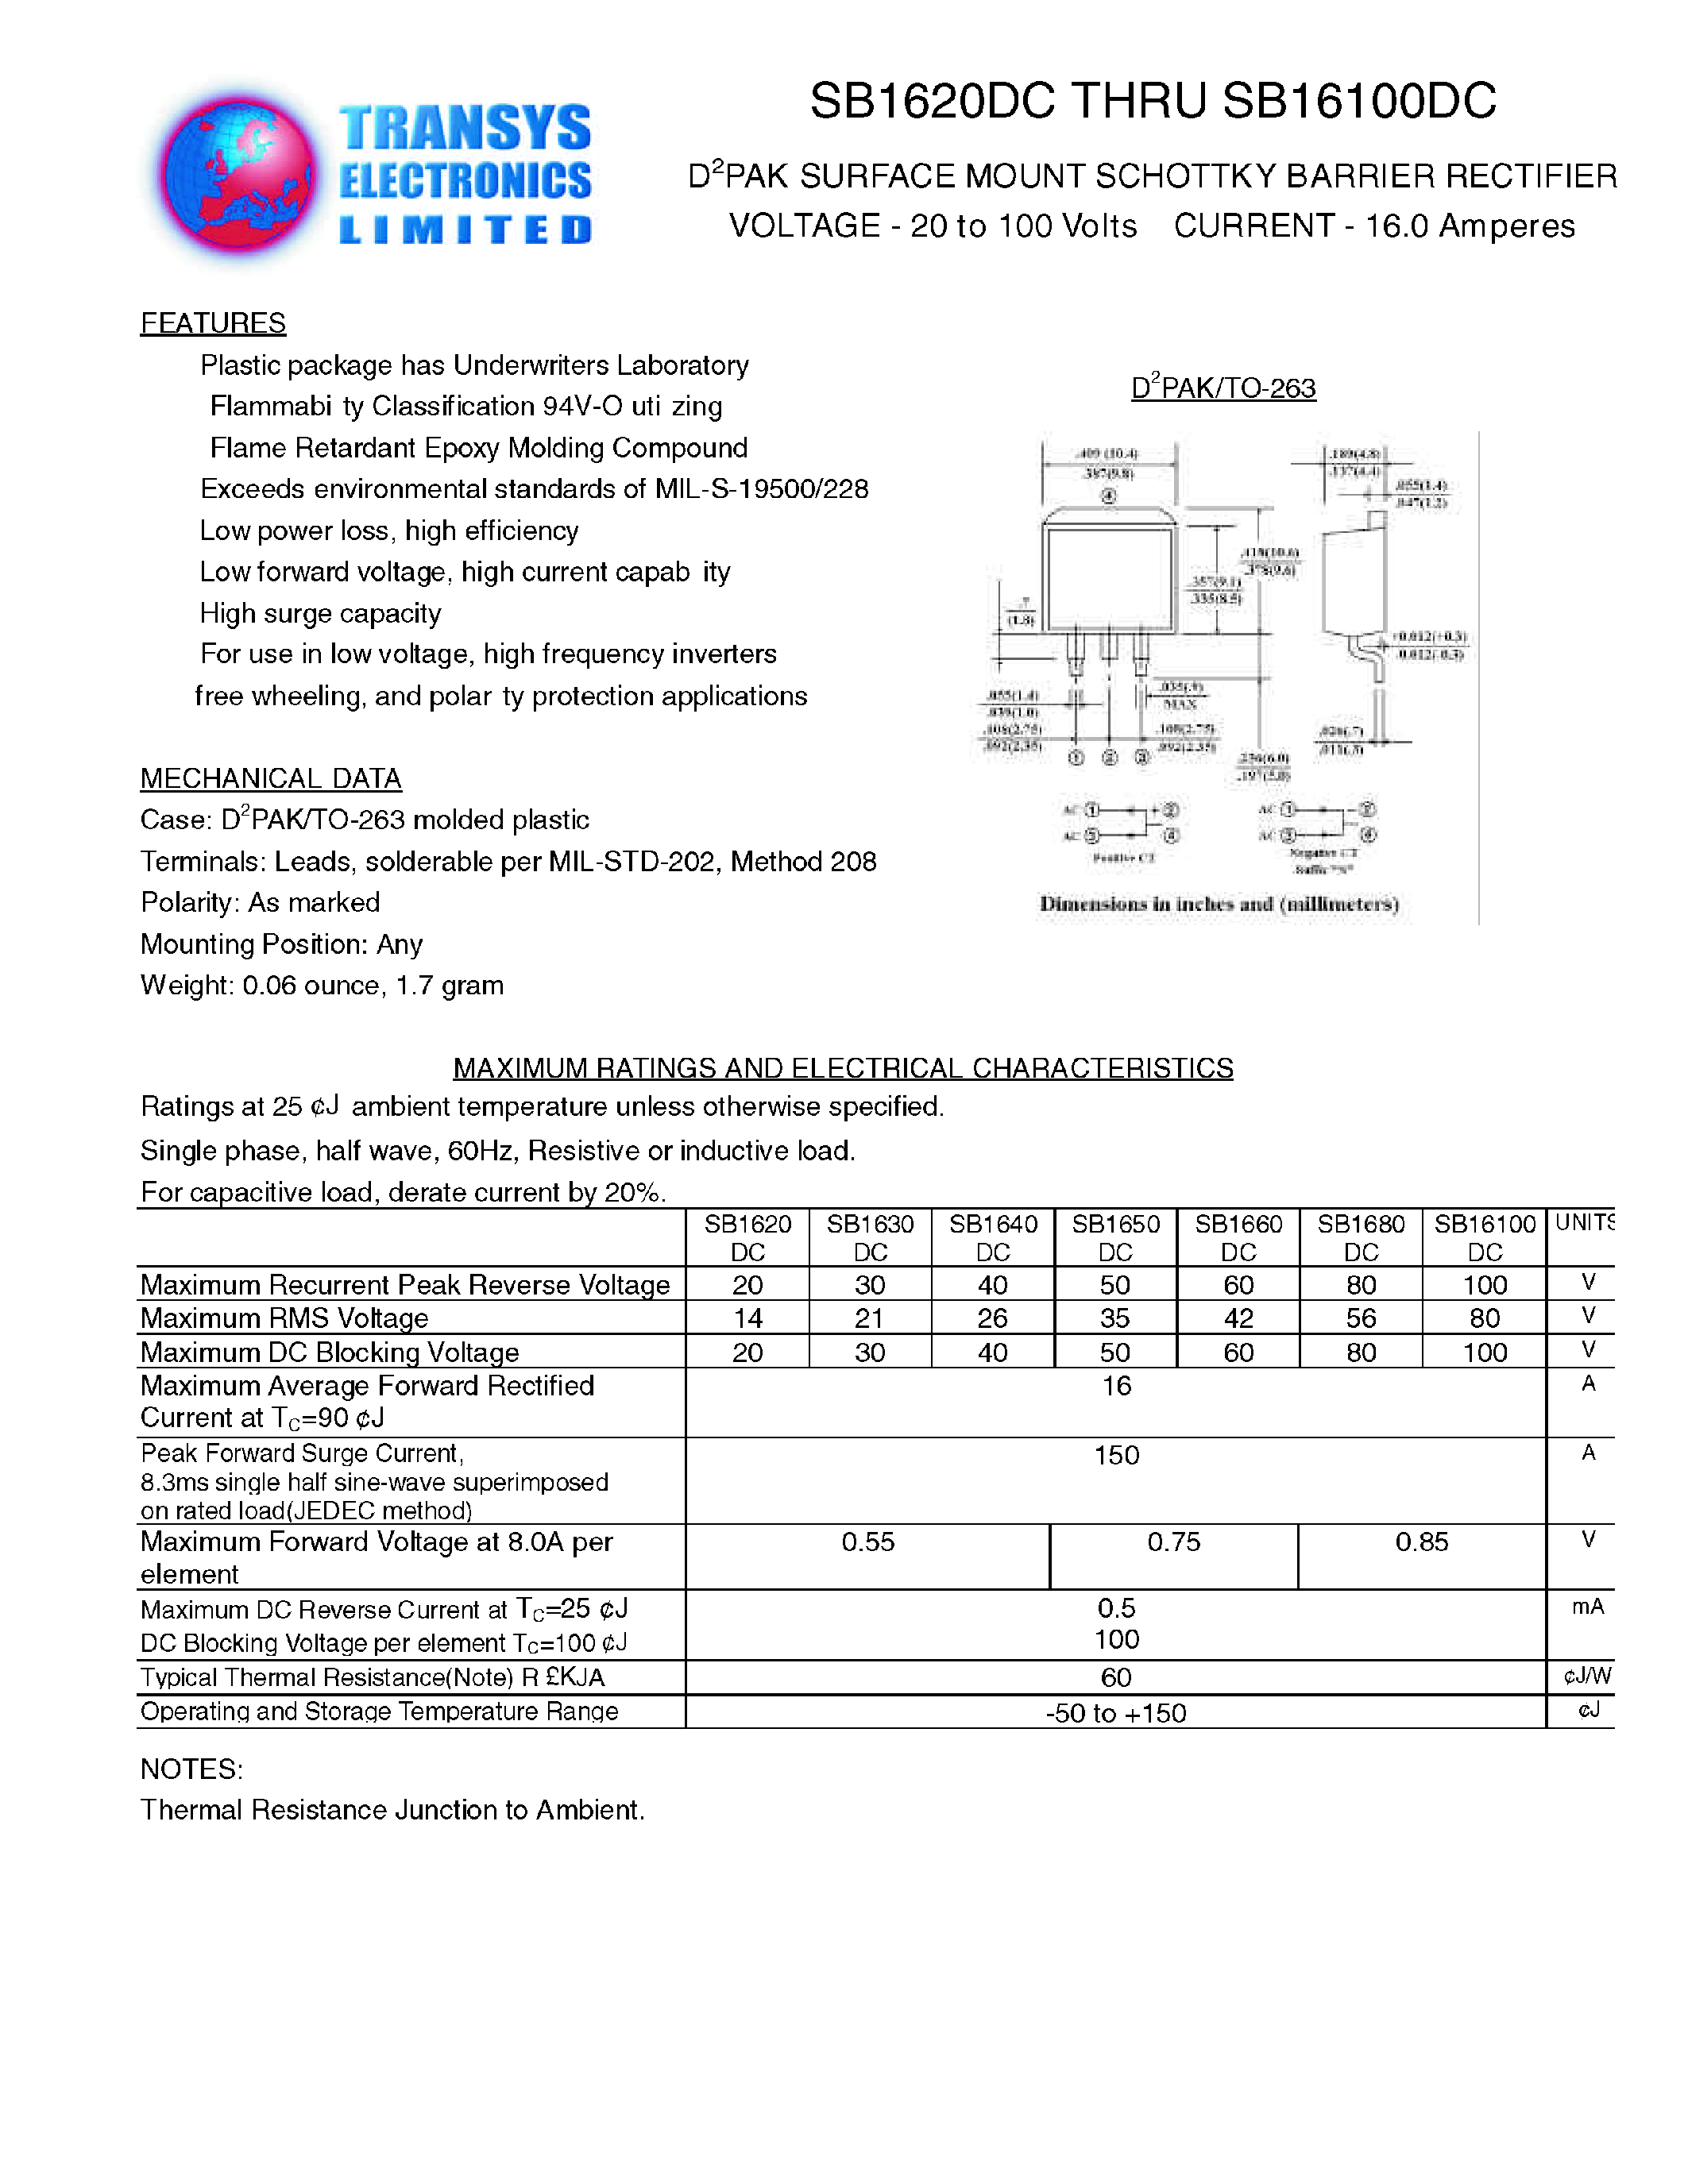 Datasheet SB1660DC - D2PAK SURFACE MOUNT SCHOTTKY BARRIER RECTIFIER page 1